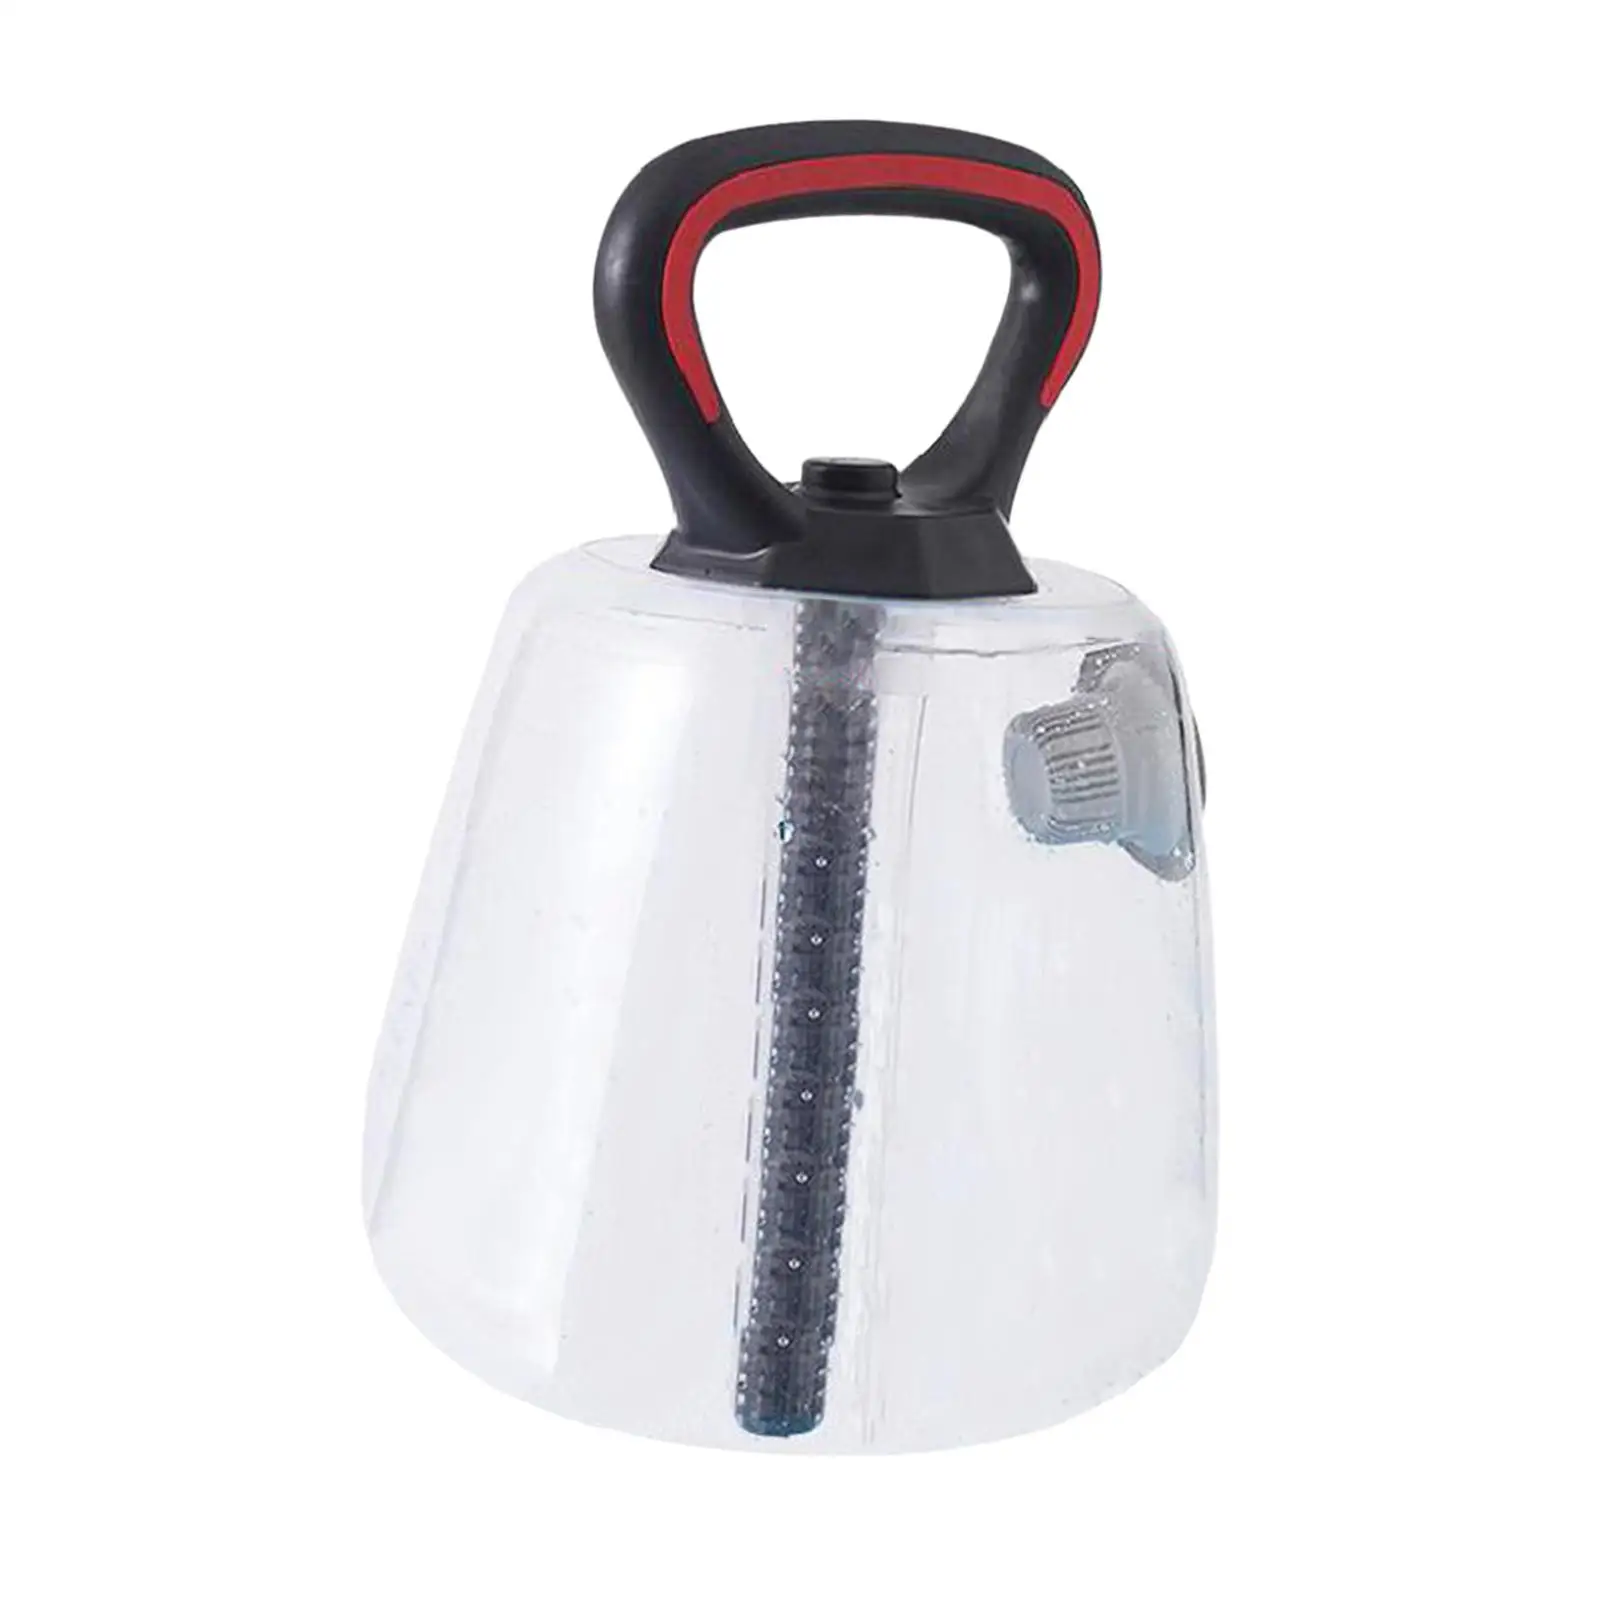 Water Filled Kettlebell Accessory Strength Training Equipment Water Bottle for Gym Full Body Household Travel Exercise